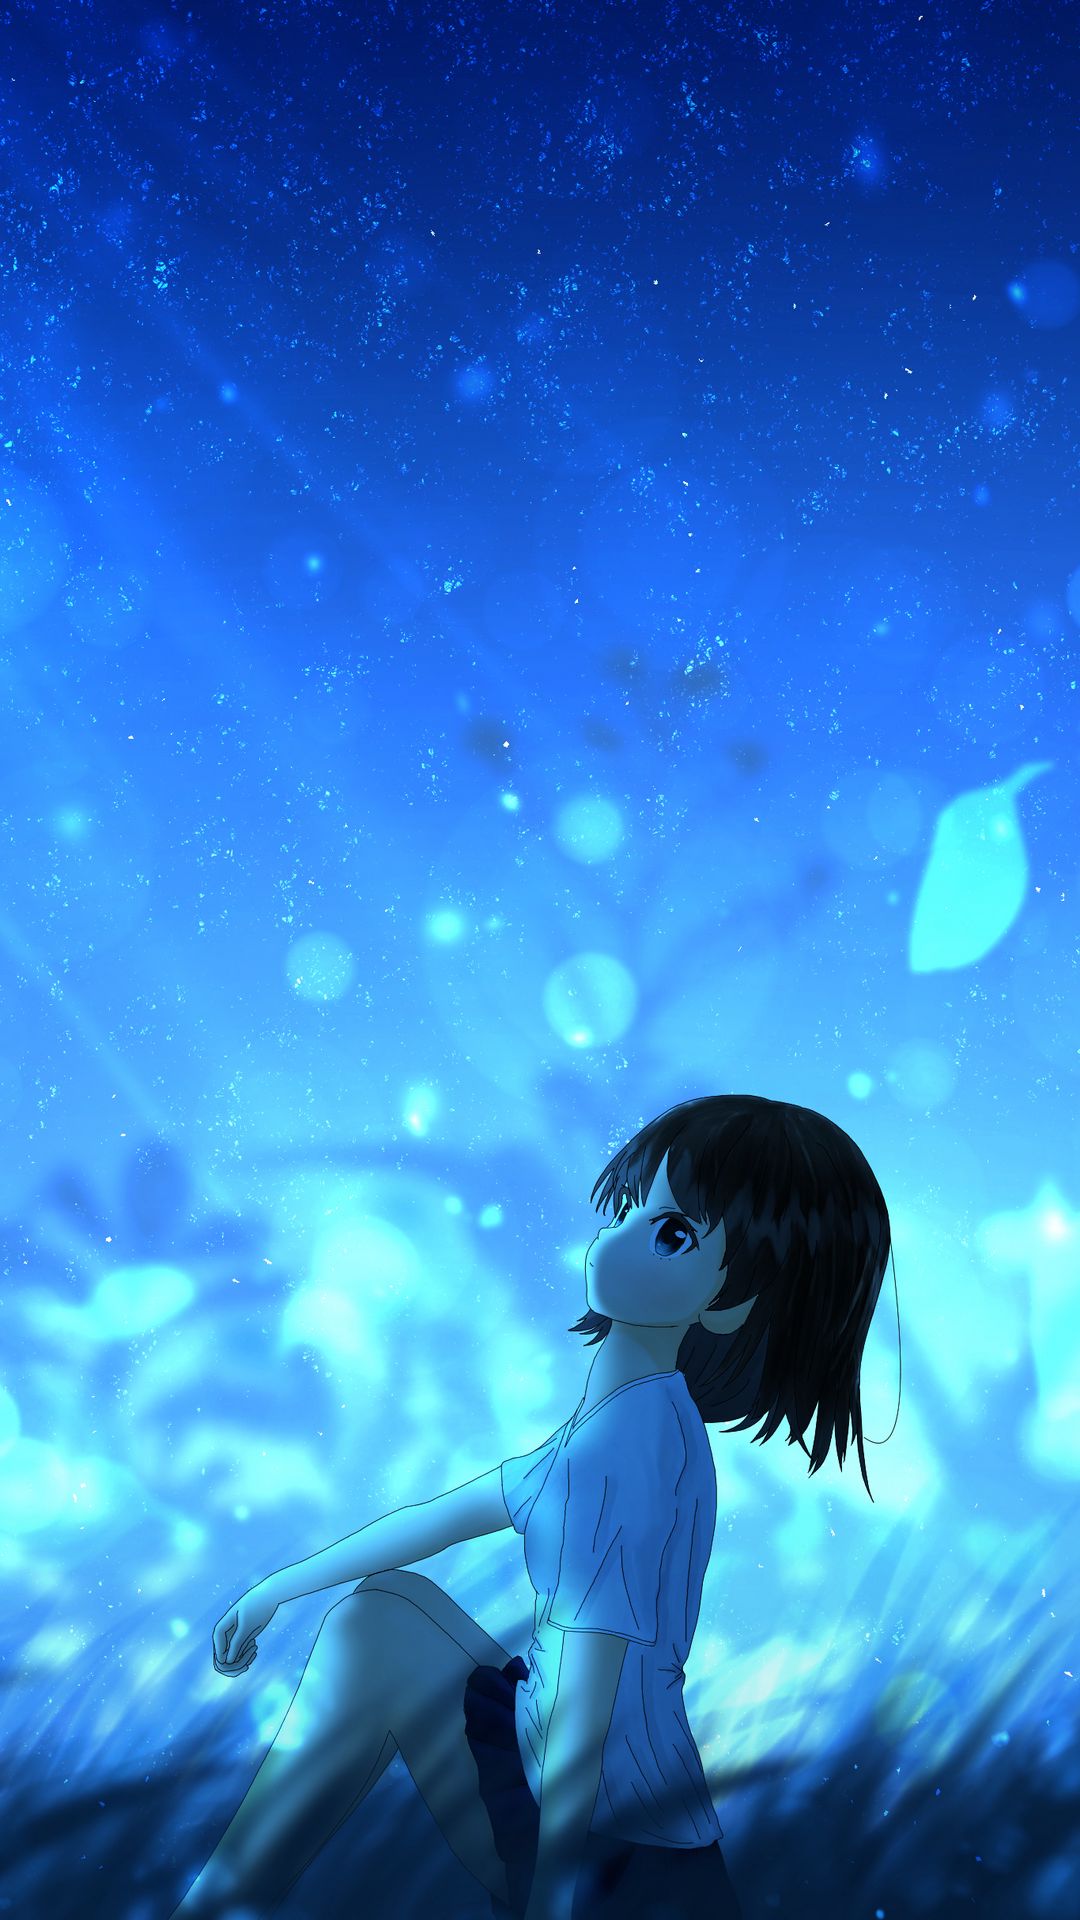 Download wallpaper 1080x1920 anime, girl, leaves, wind samsung galaxy s s note, sony xperia z, z z z htc one, lenovo vibe HD background